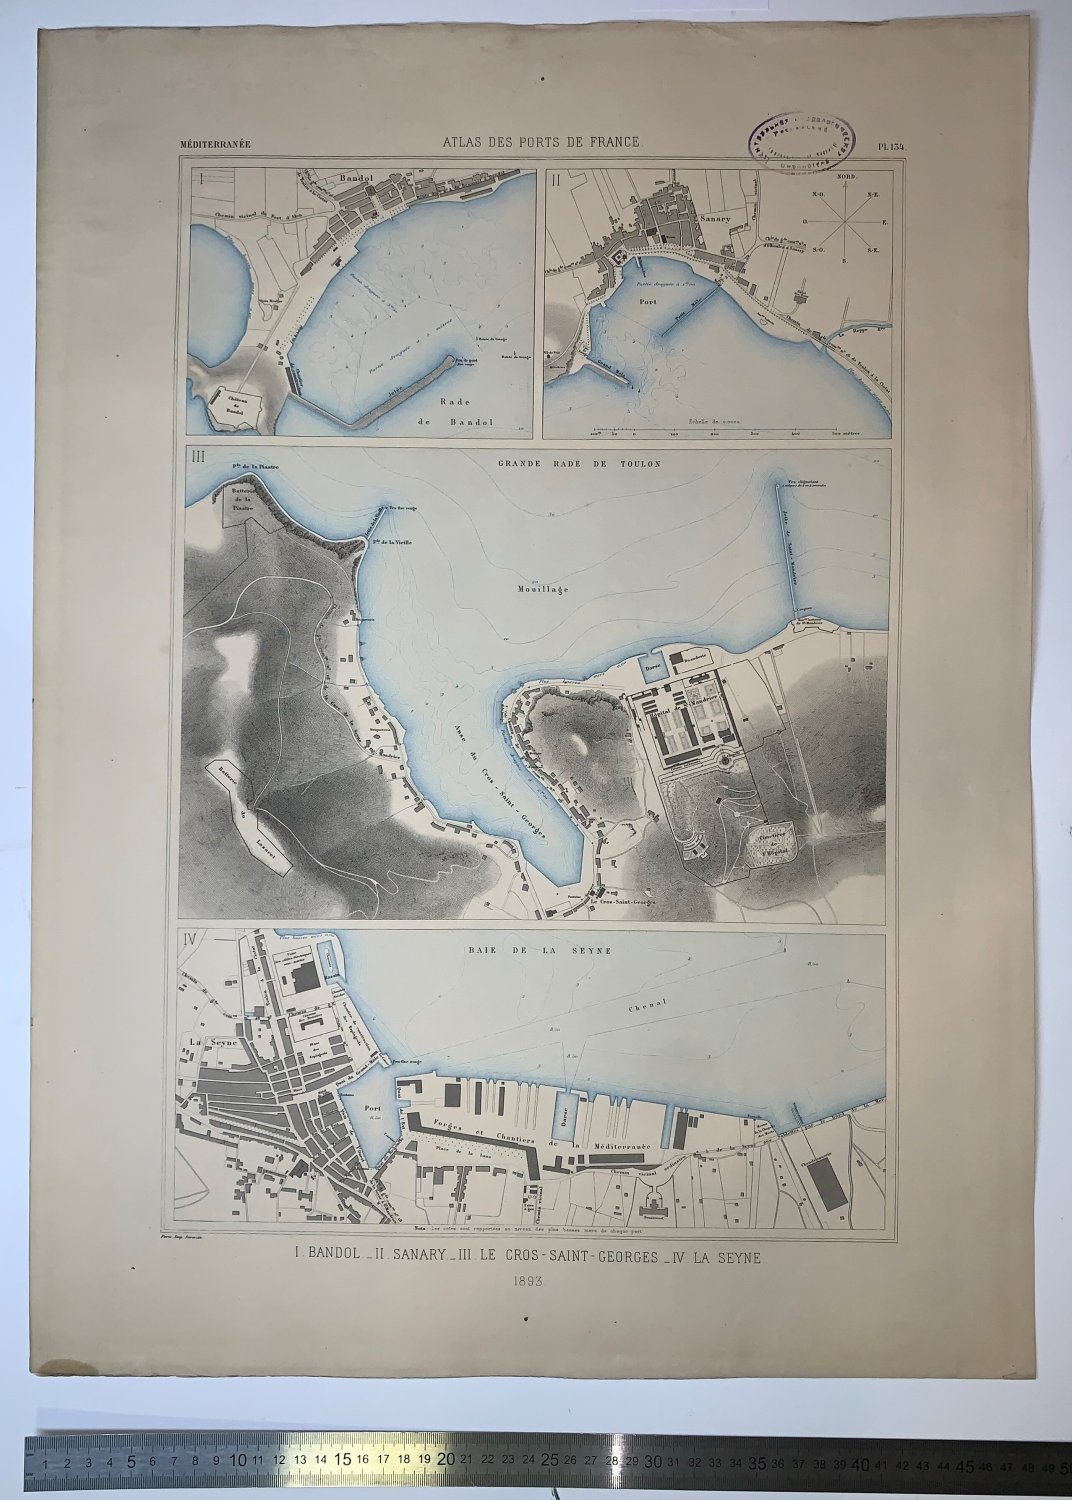 Atlas des ports de France. I. Bandol. II. Sanary. III. Le Cros-Saint-Georges. IV. La Seyne